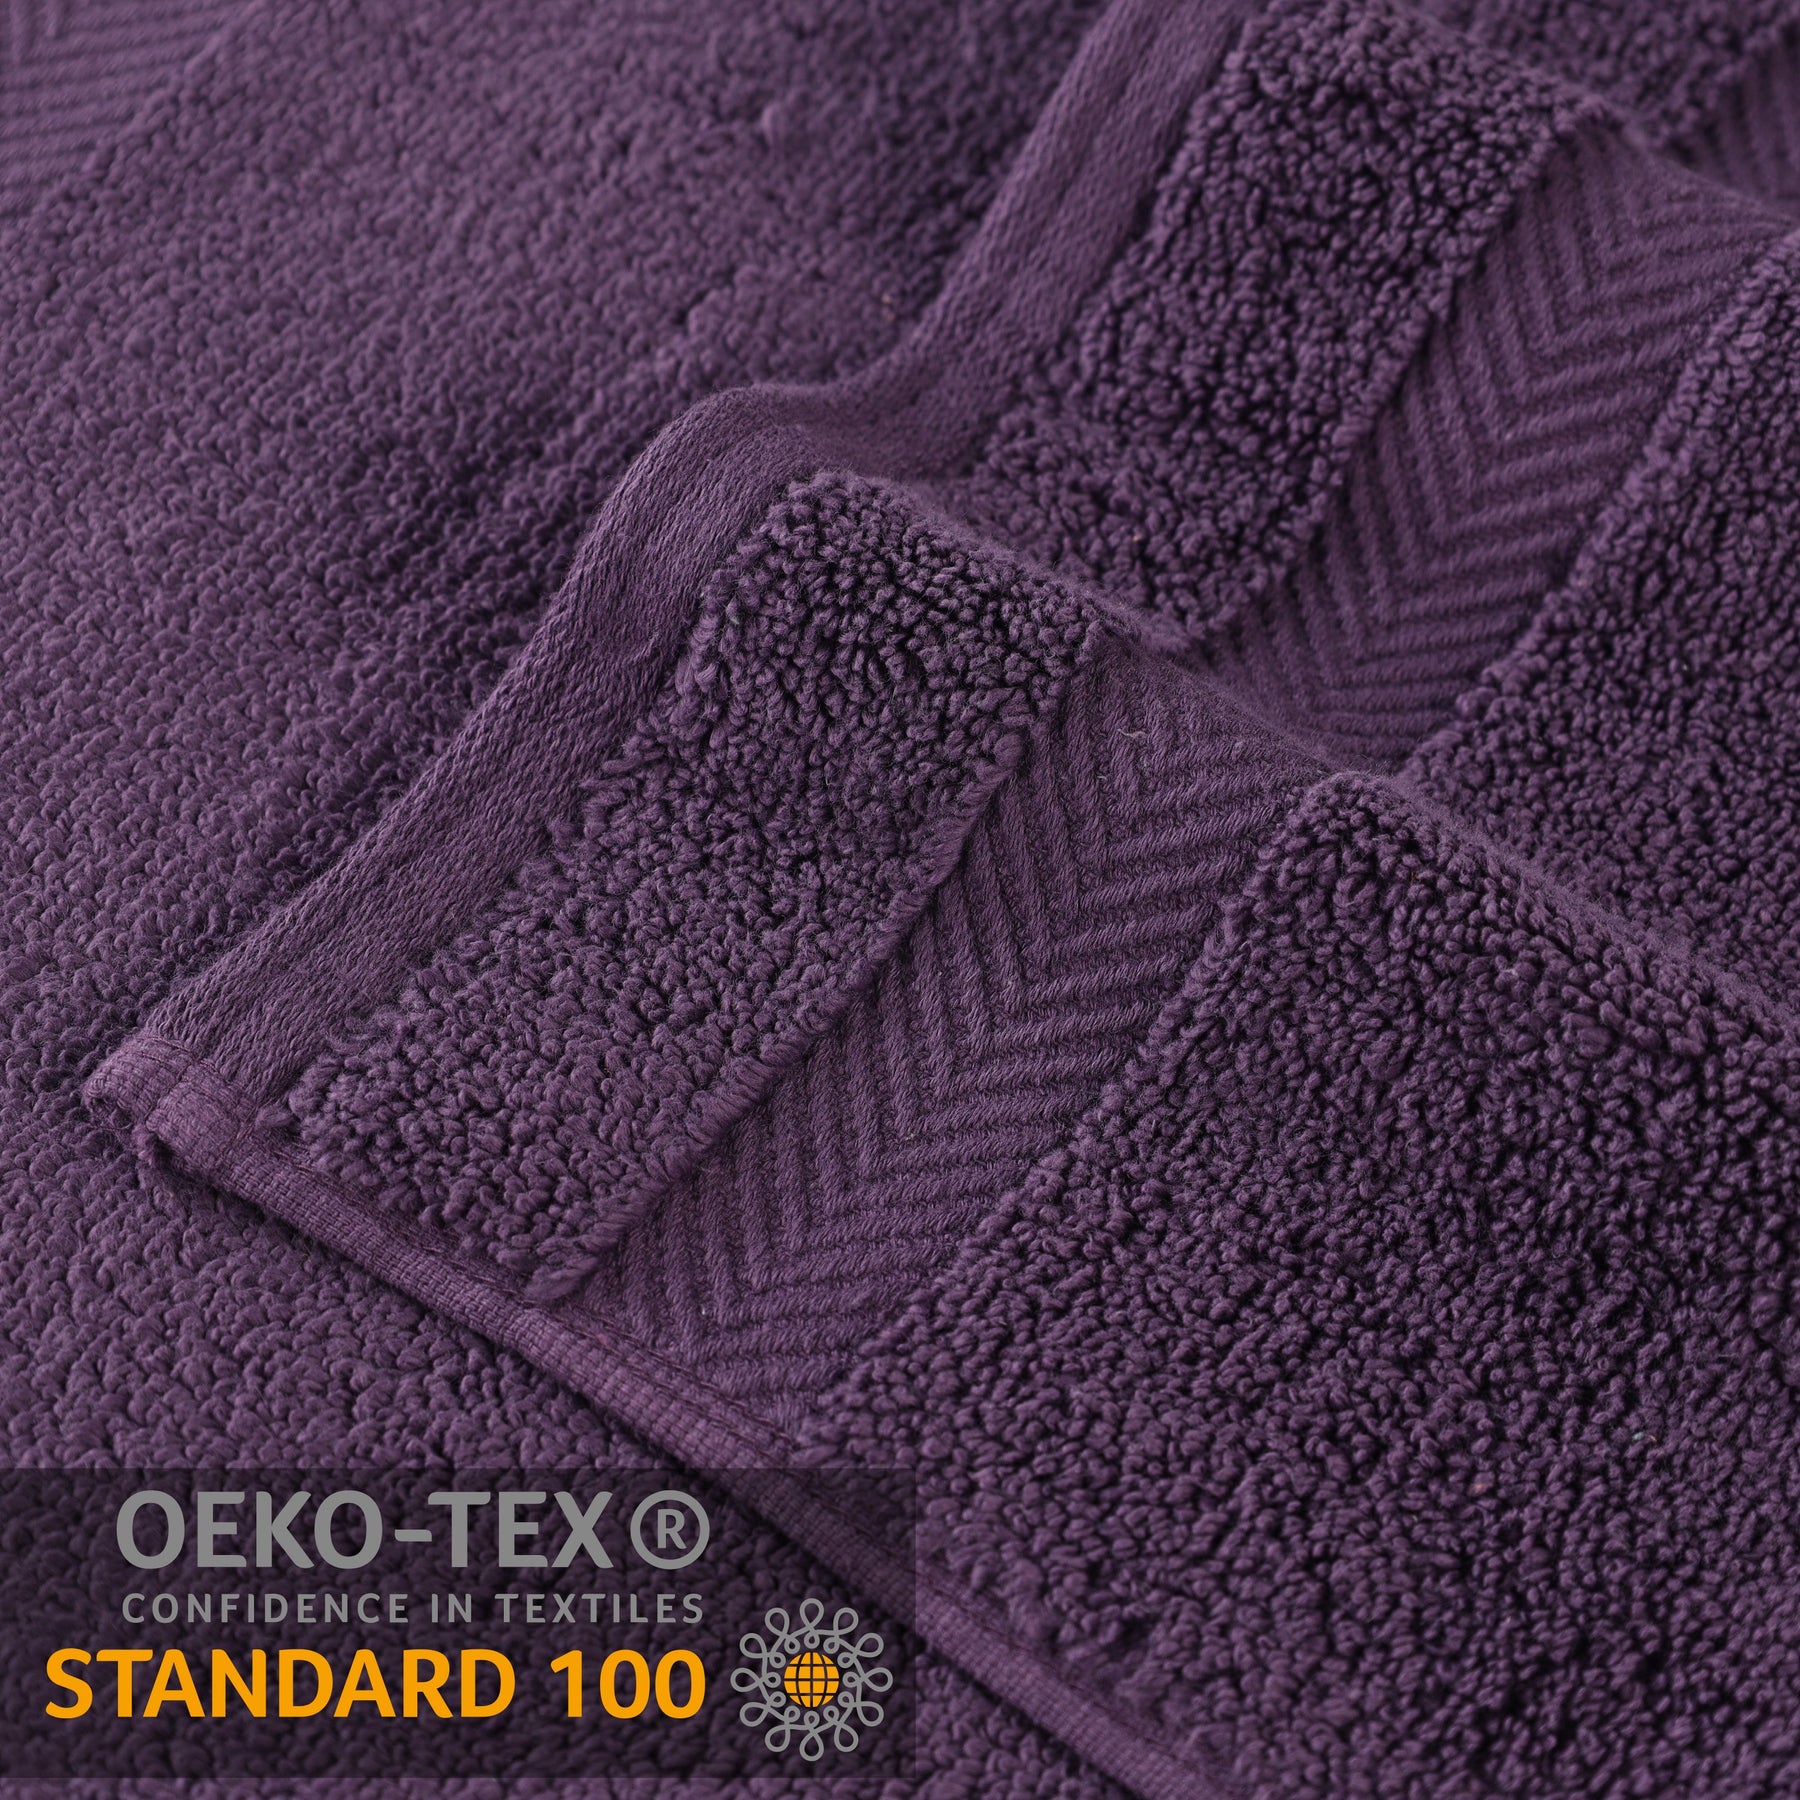 Zero Twist Cotton Ultra-Soft Absorbent Face Towel Washcloth - Grape Seed